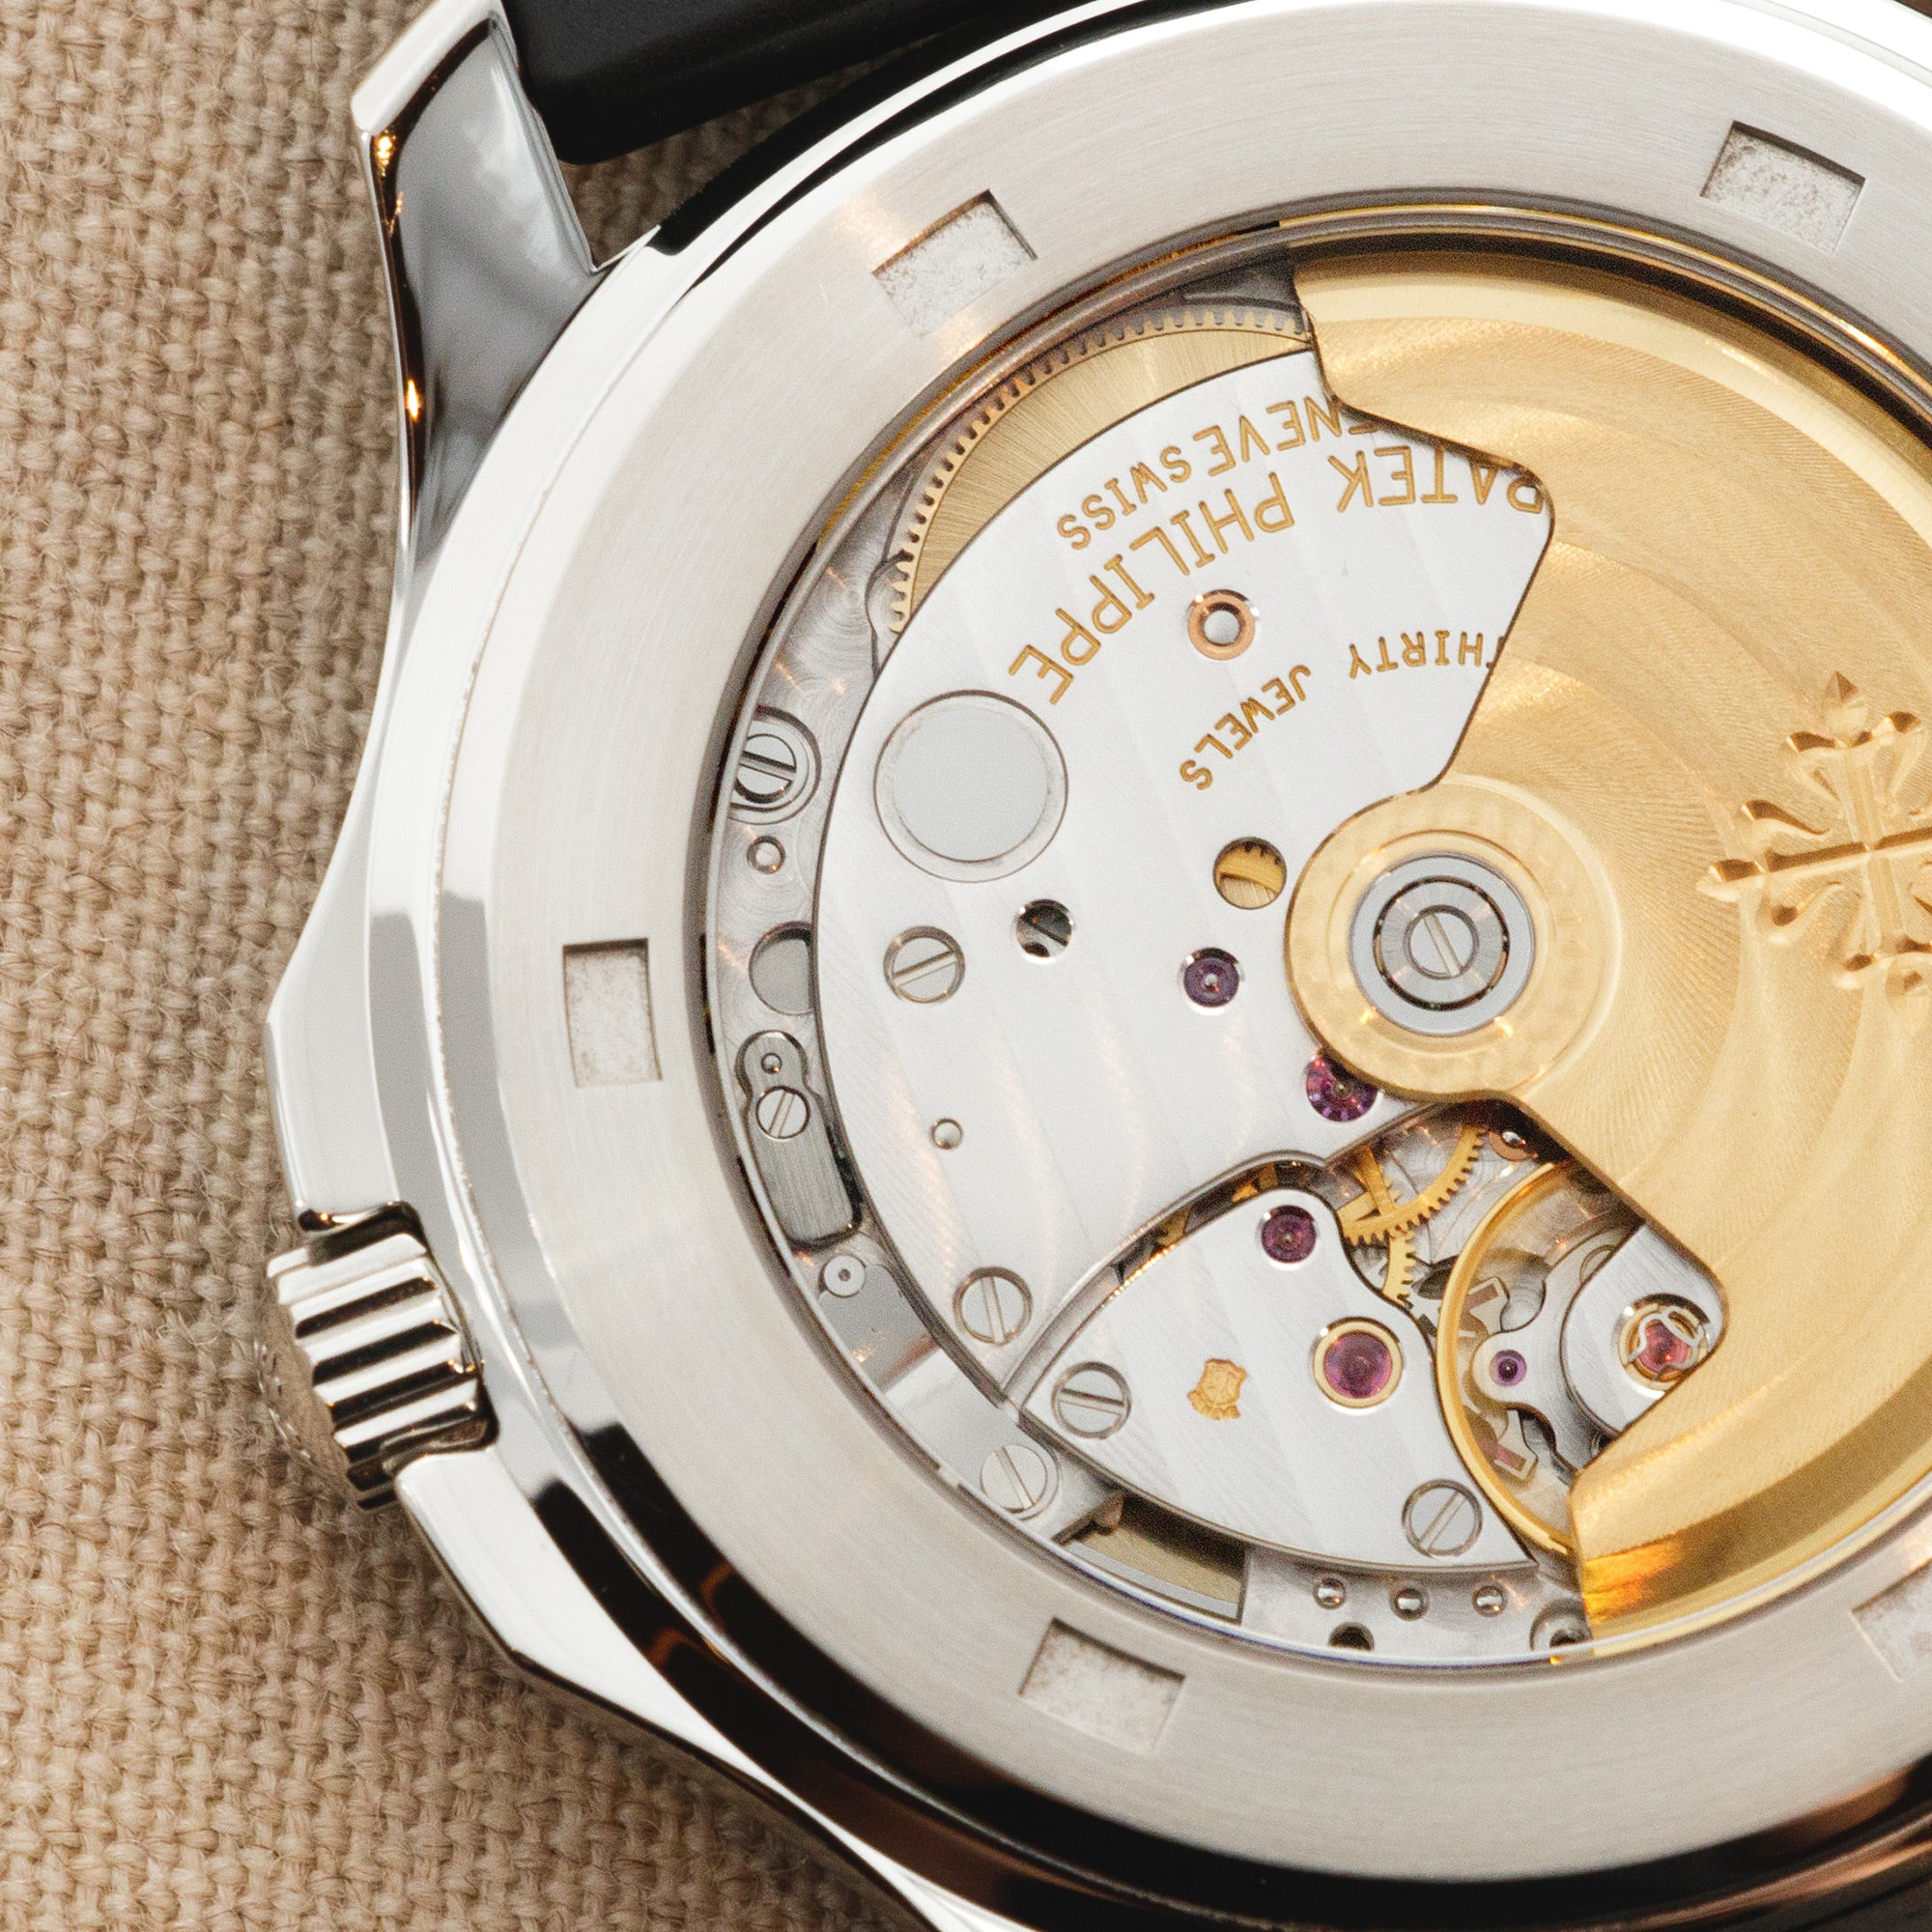 Patek Philippe - Patek Philippe Steel Aquanaut Ref. 5065 - The Keystone Watches